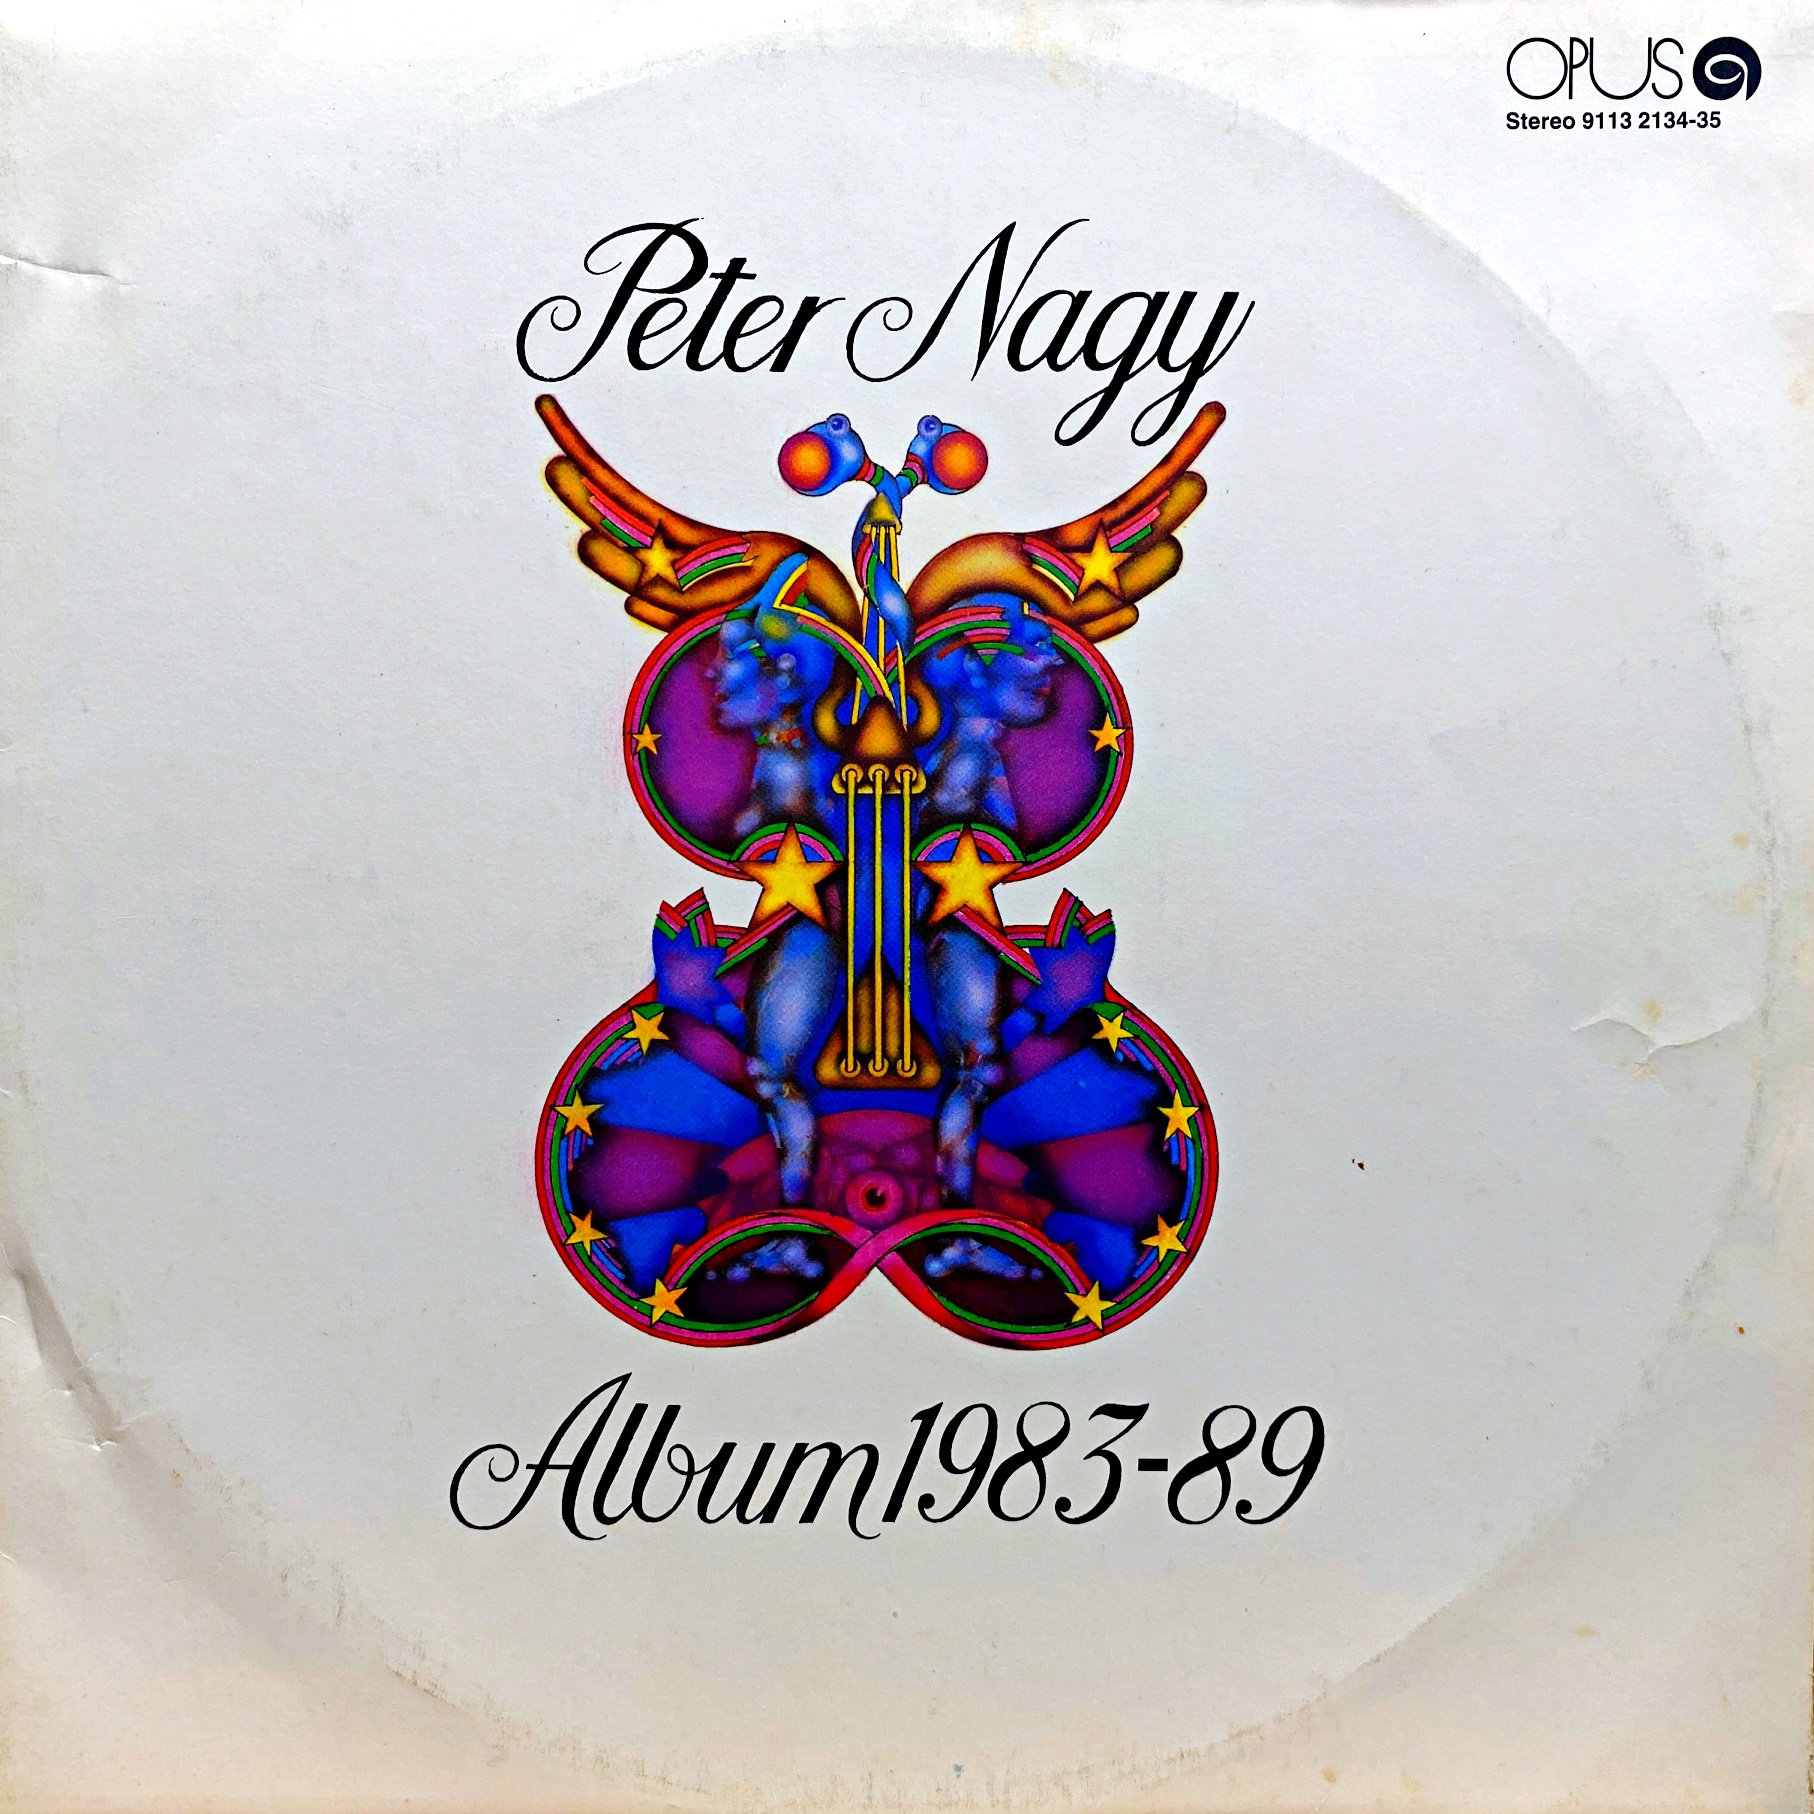 2xLP Peter Nagy ‎– Album 1983-89